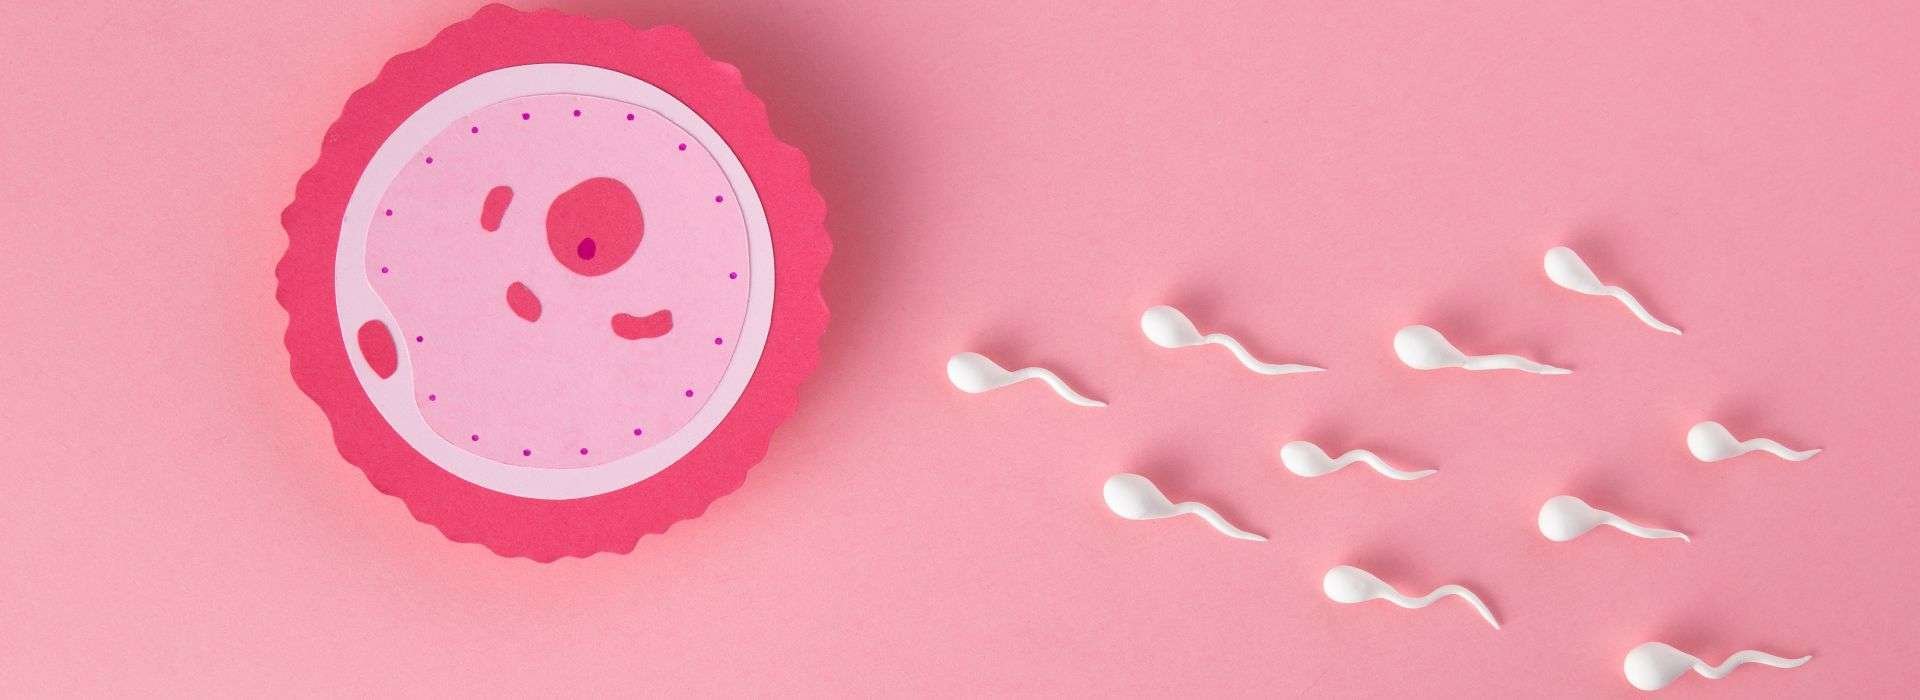 How-do-sperm-die-in-the-female-body